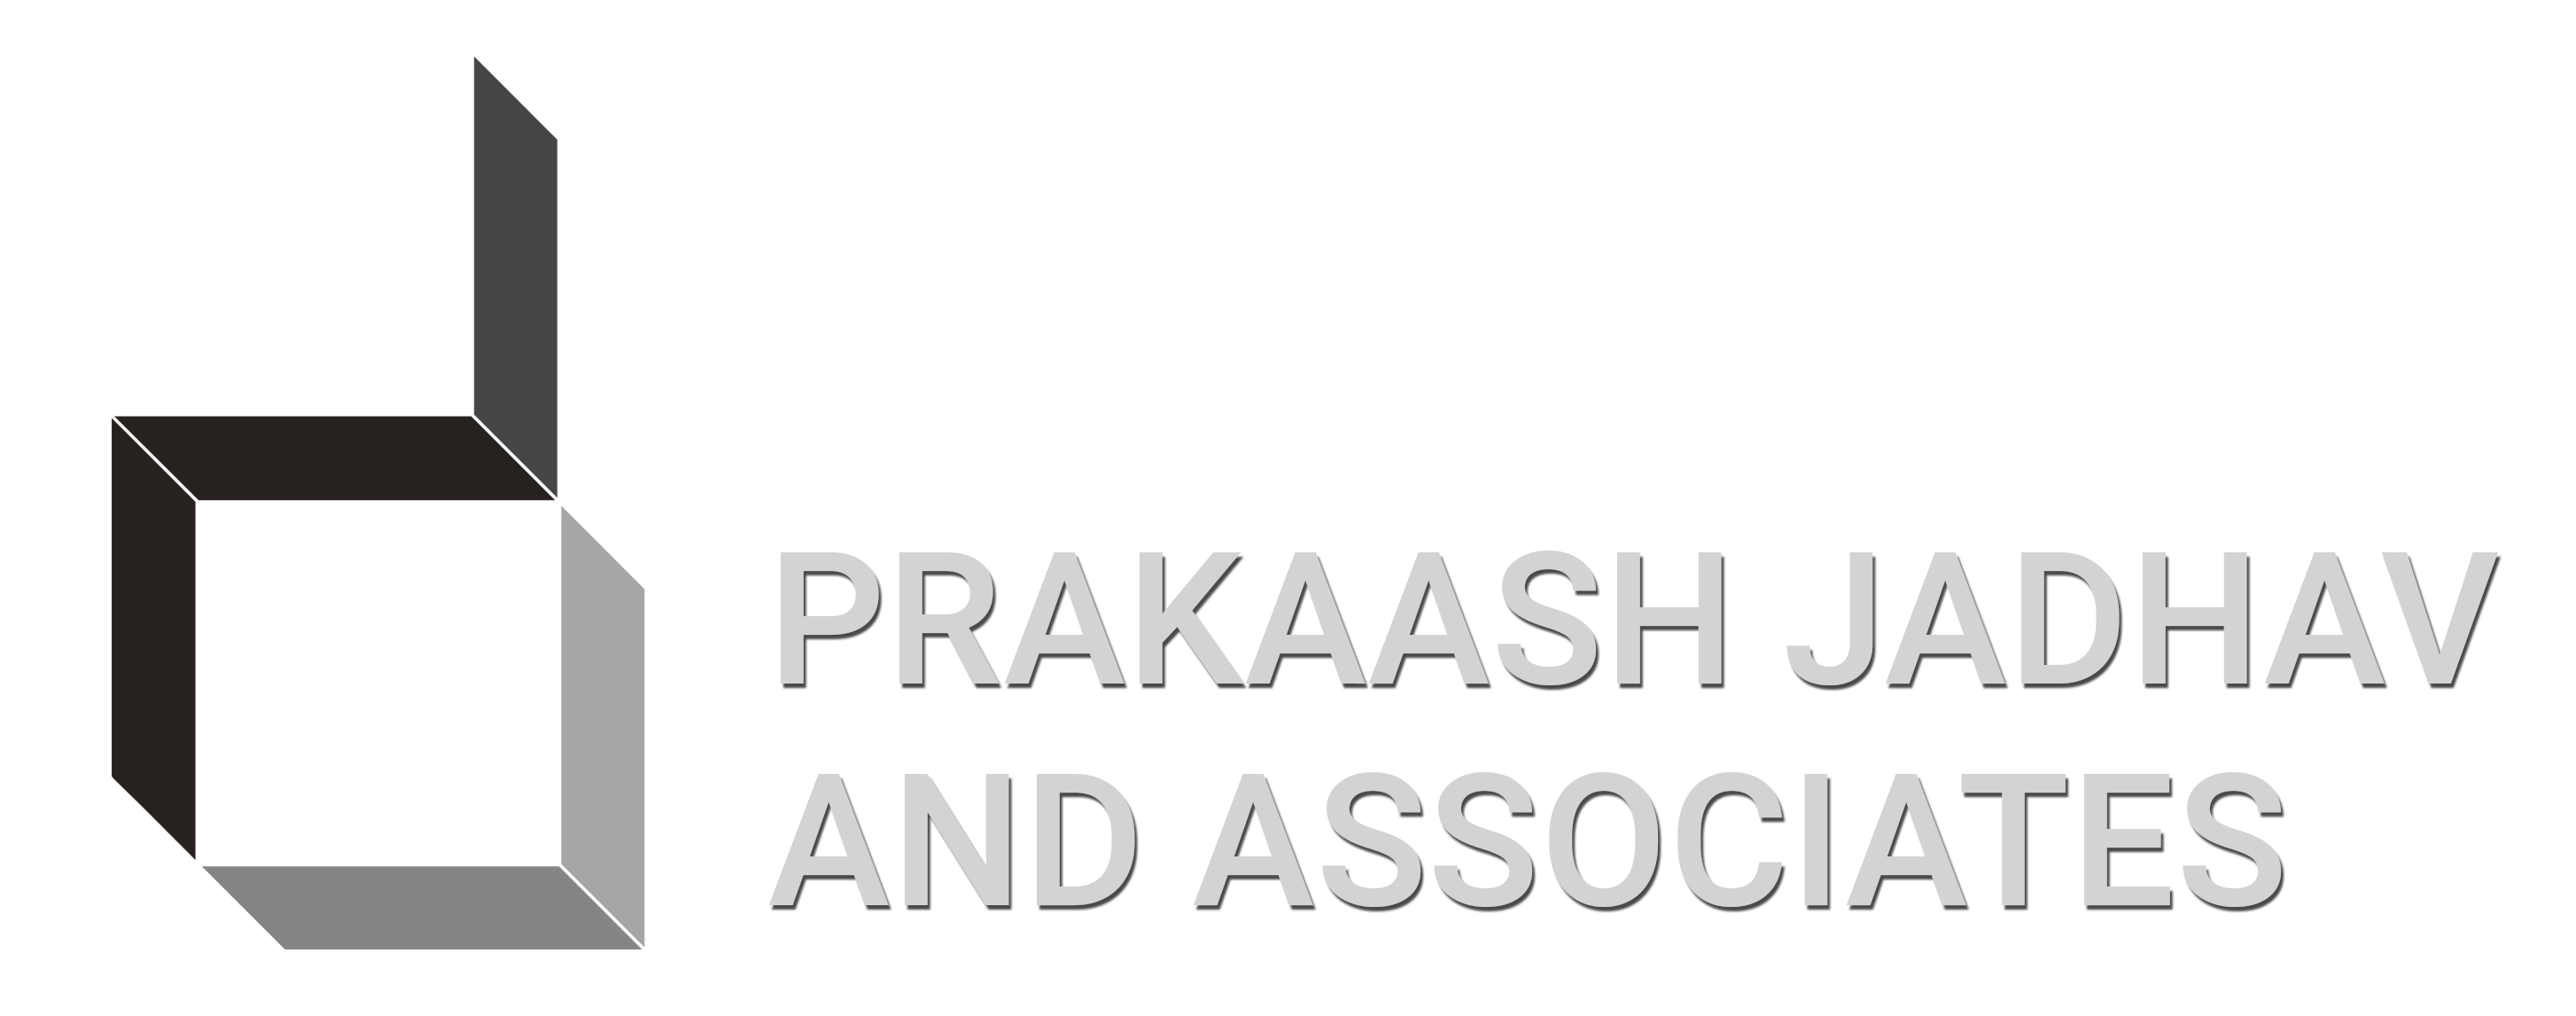 Prakaash Jadhav and Associates